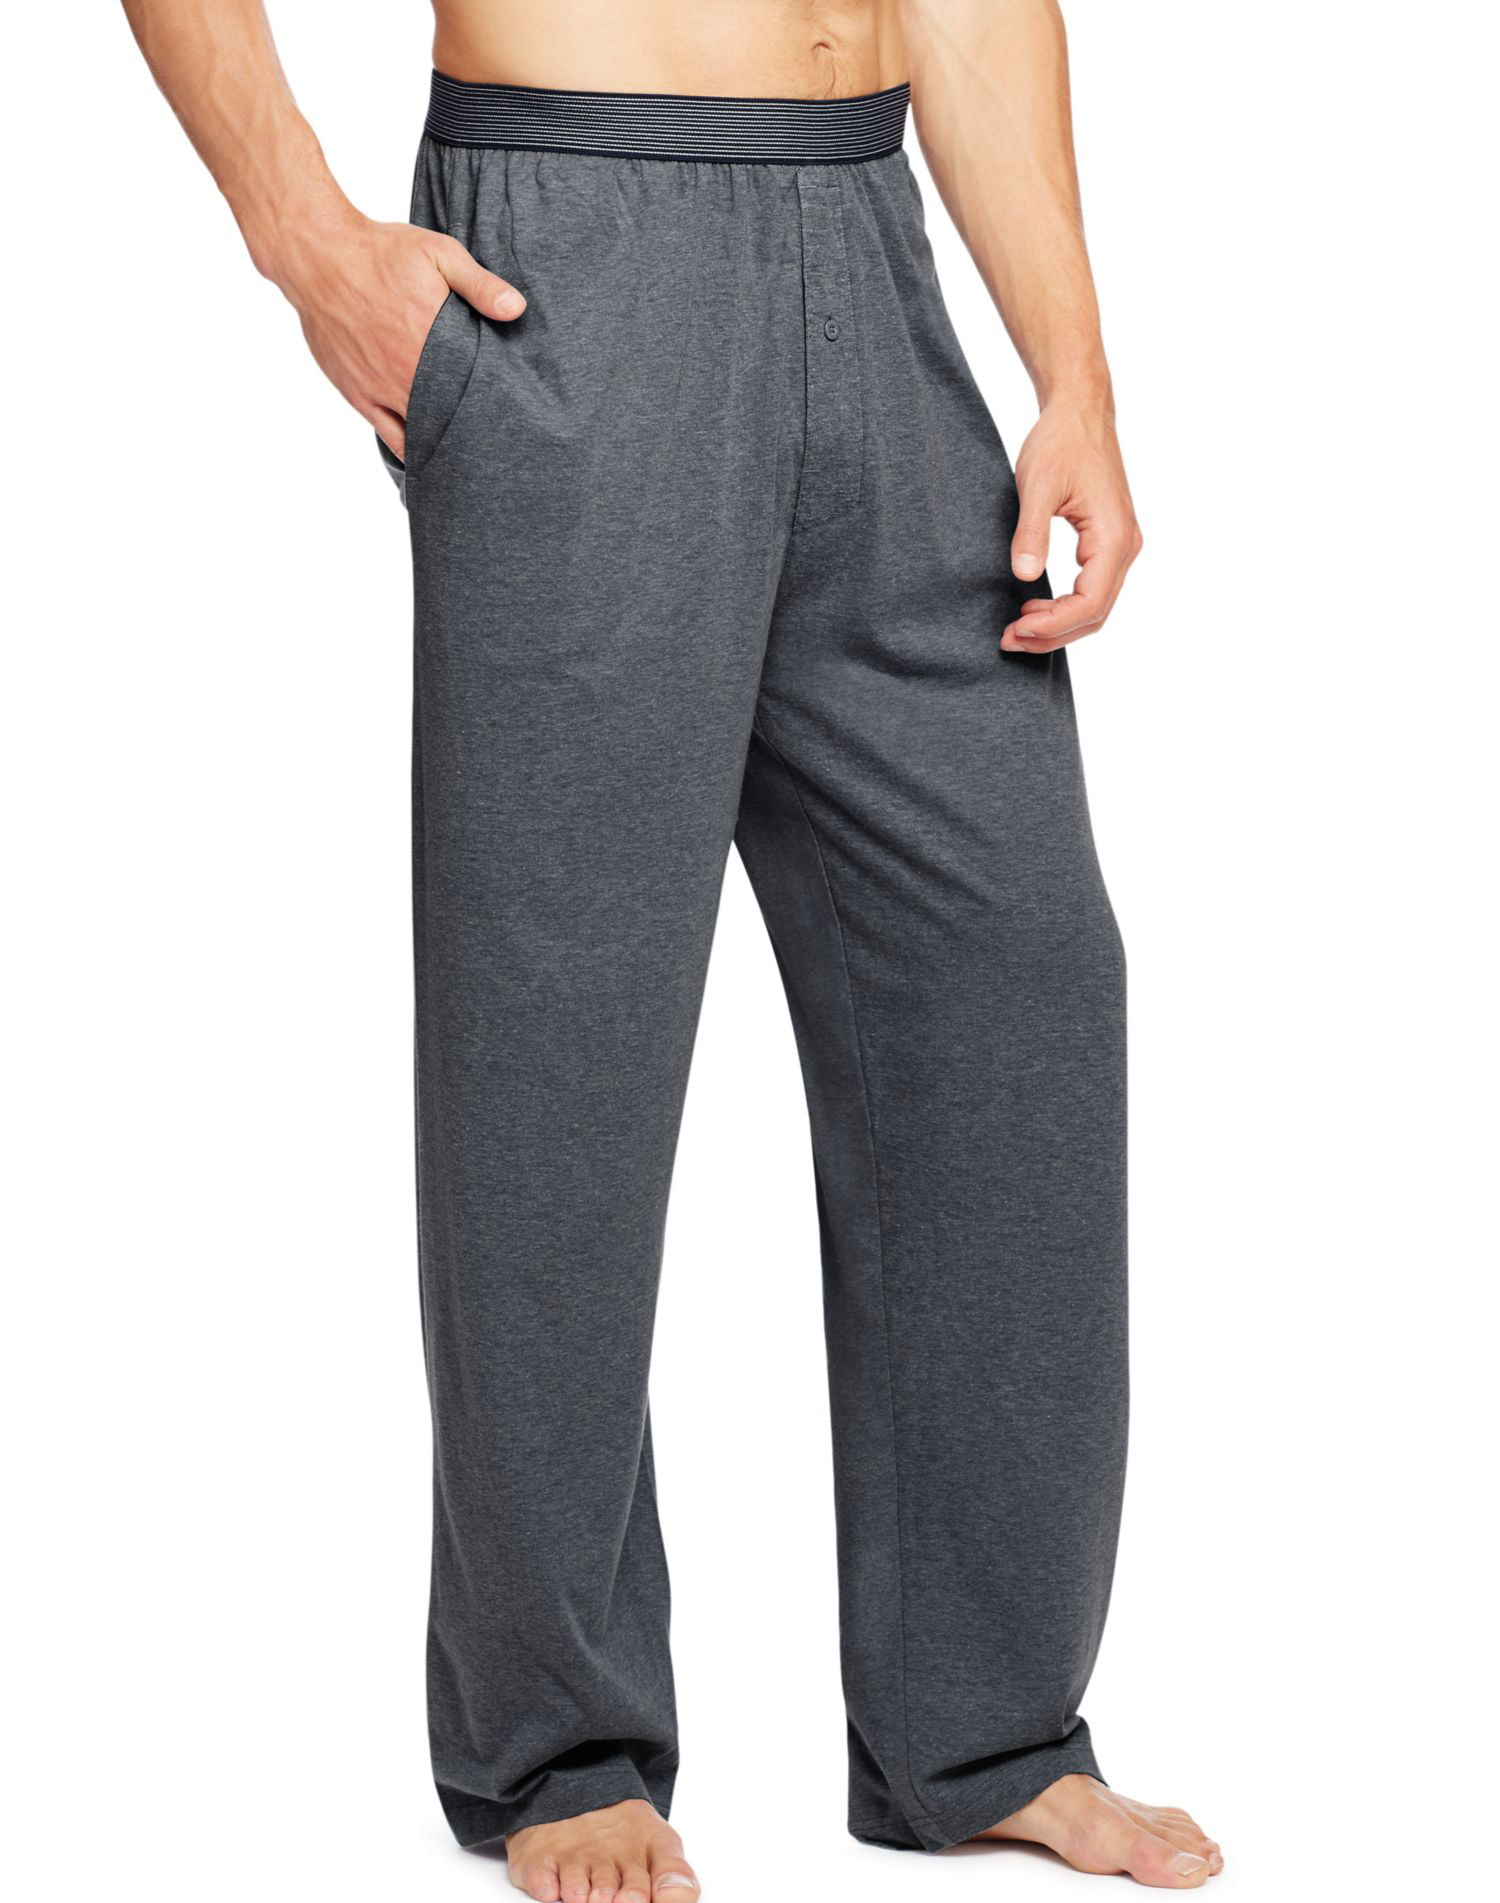 Hanes Men Pant pajama bottoms - Walmart.com